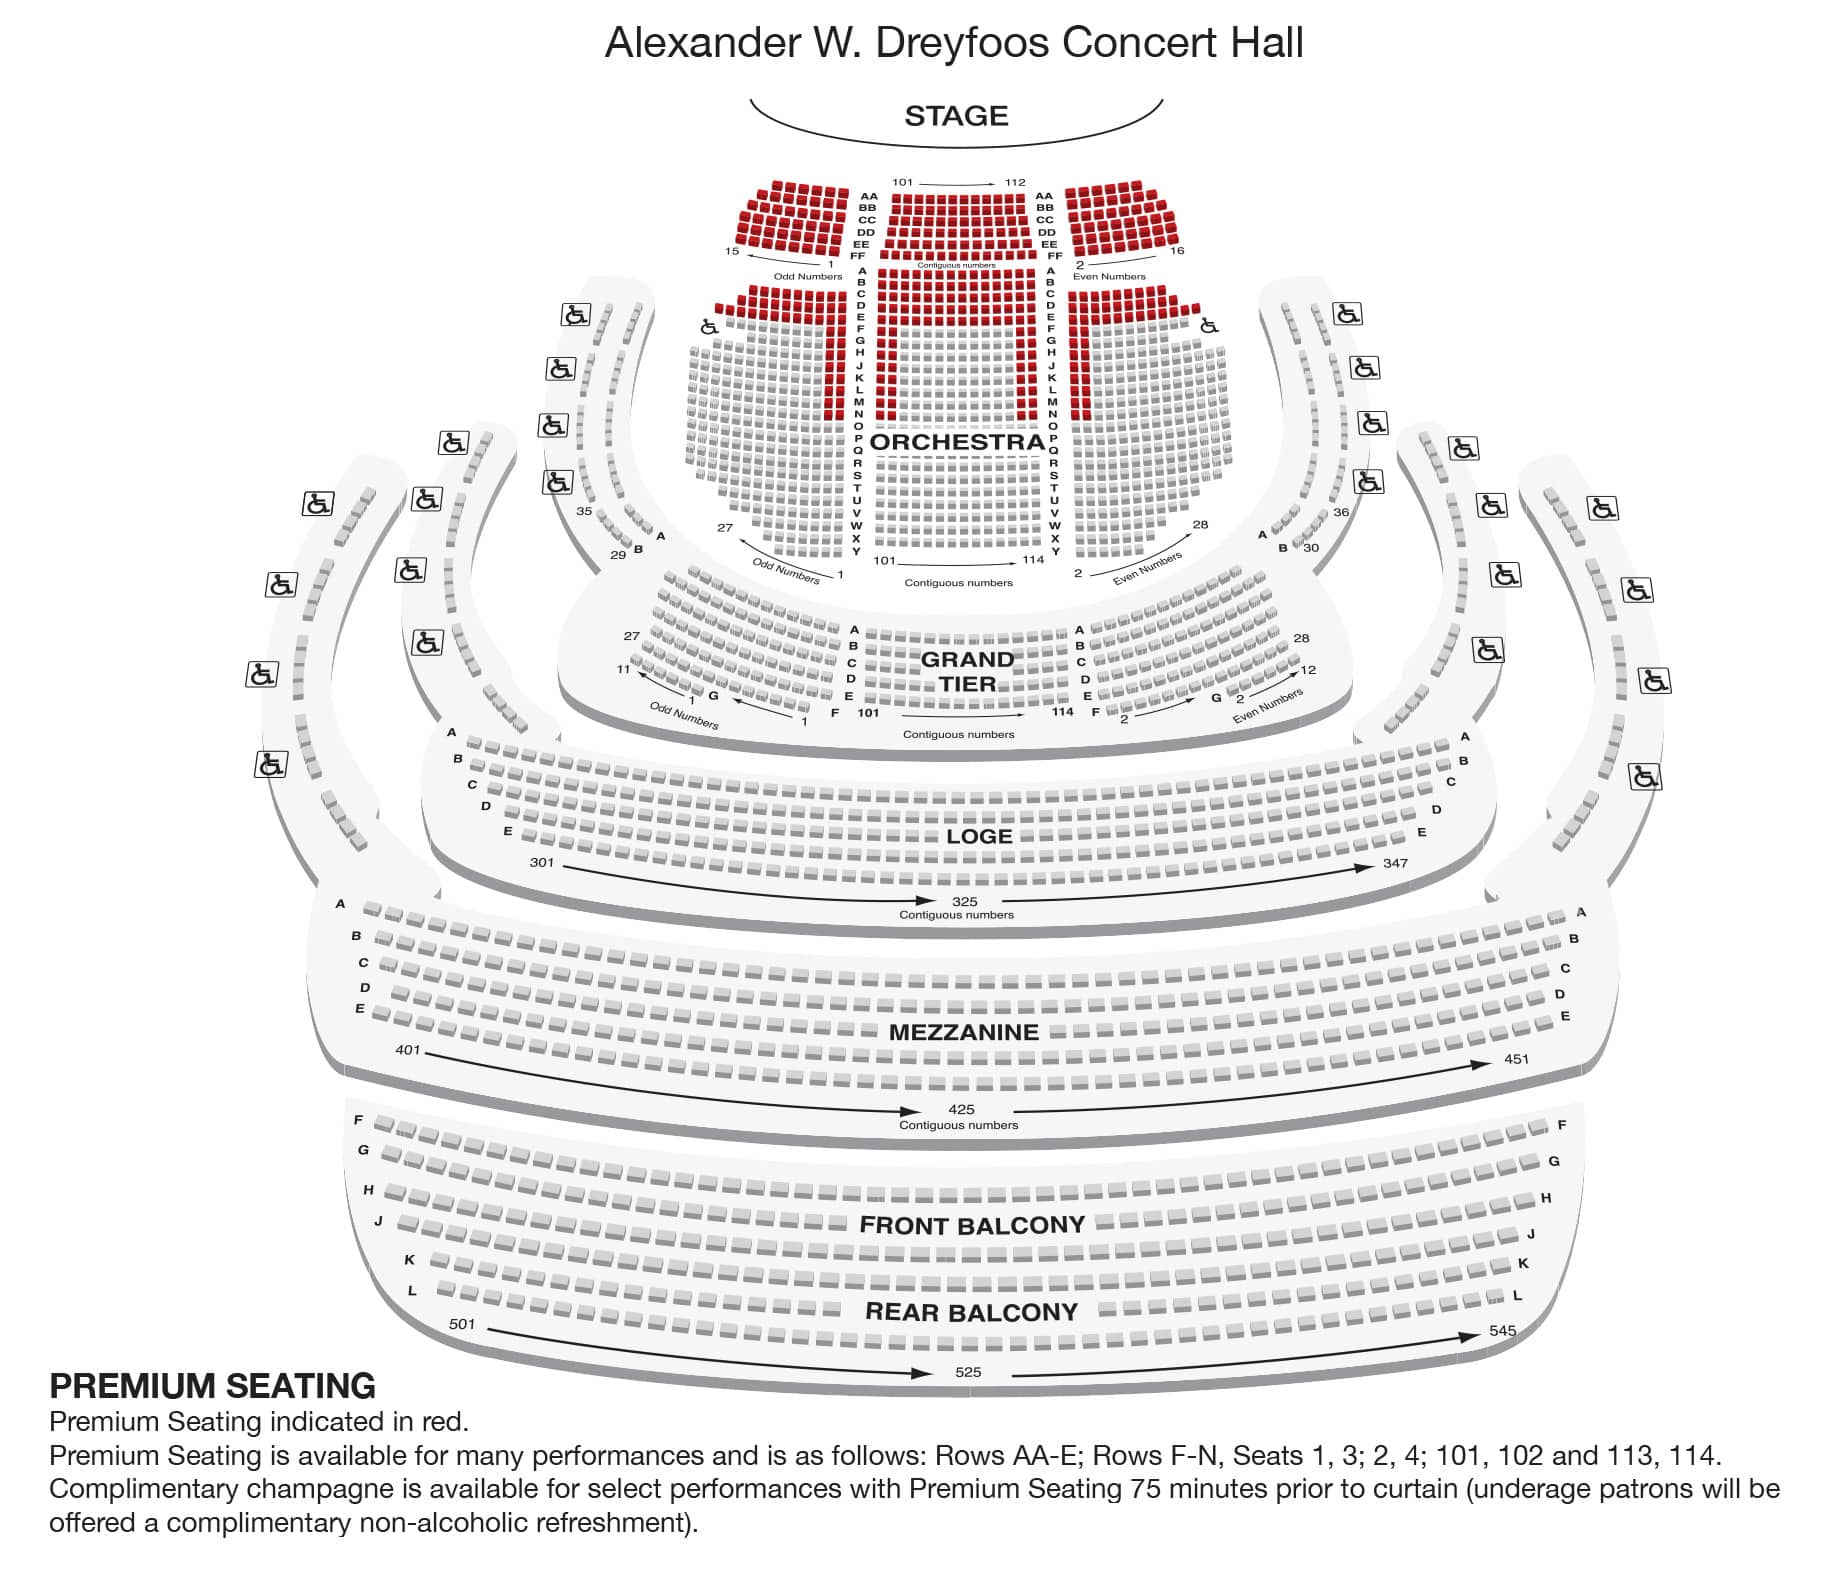 Alexander W. Dreyfoos Concert Hall - Premium